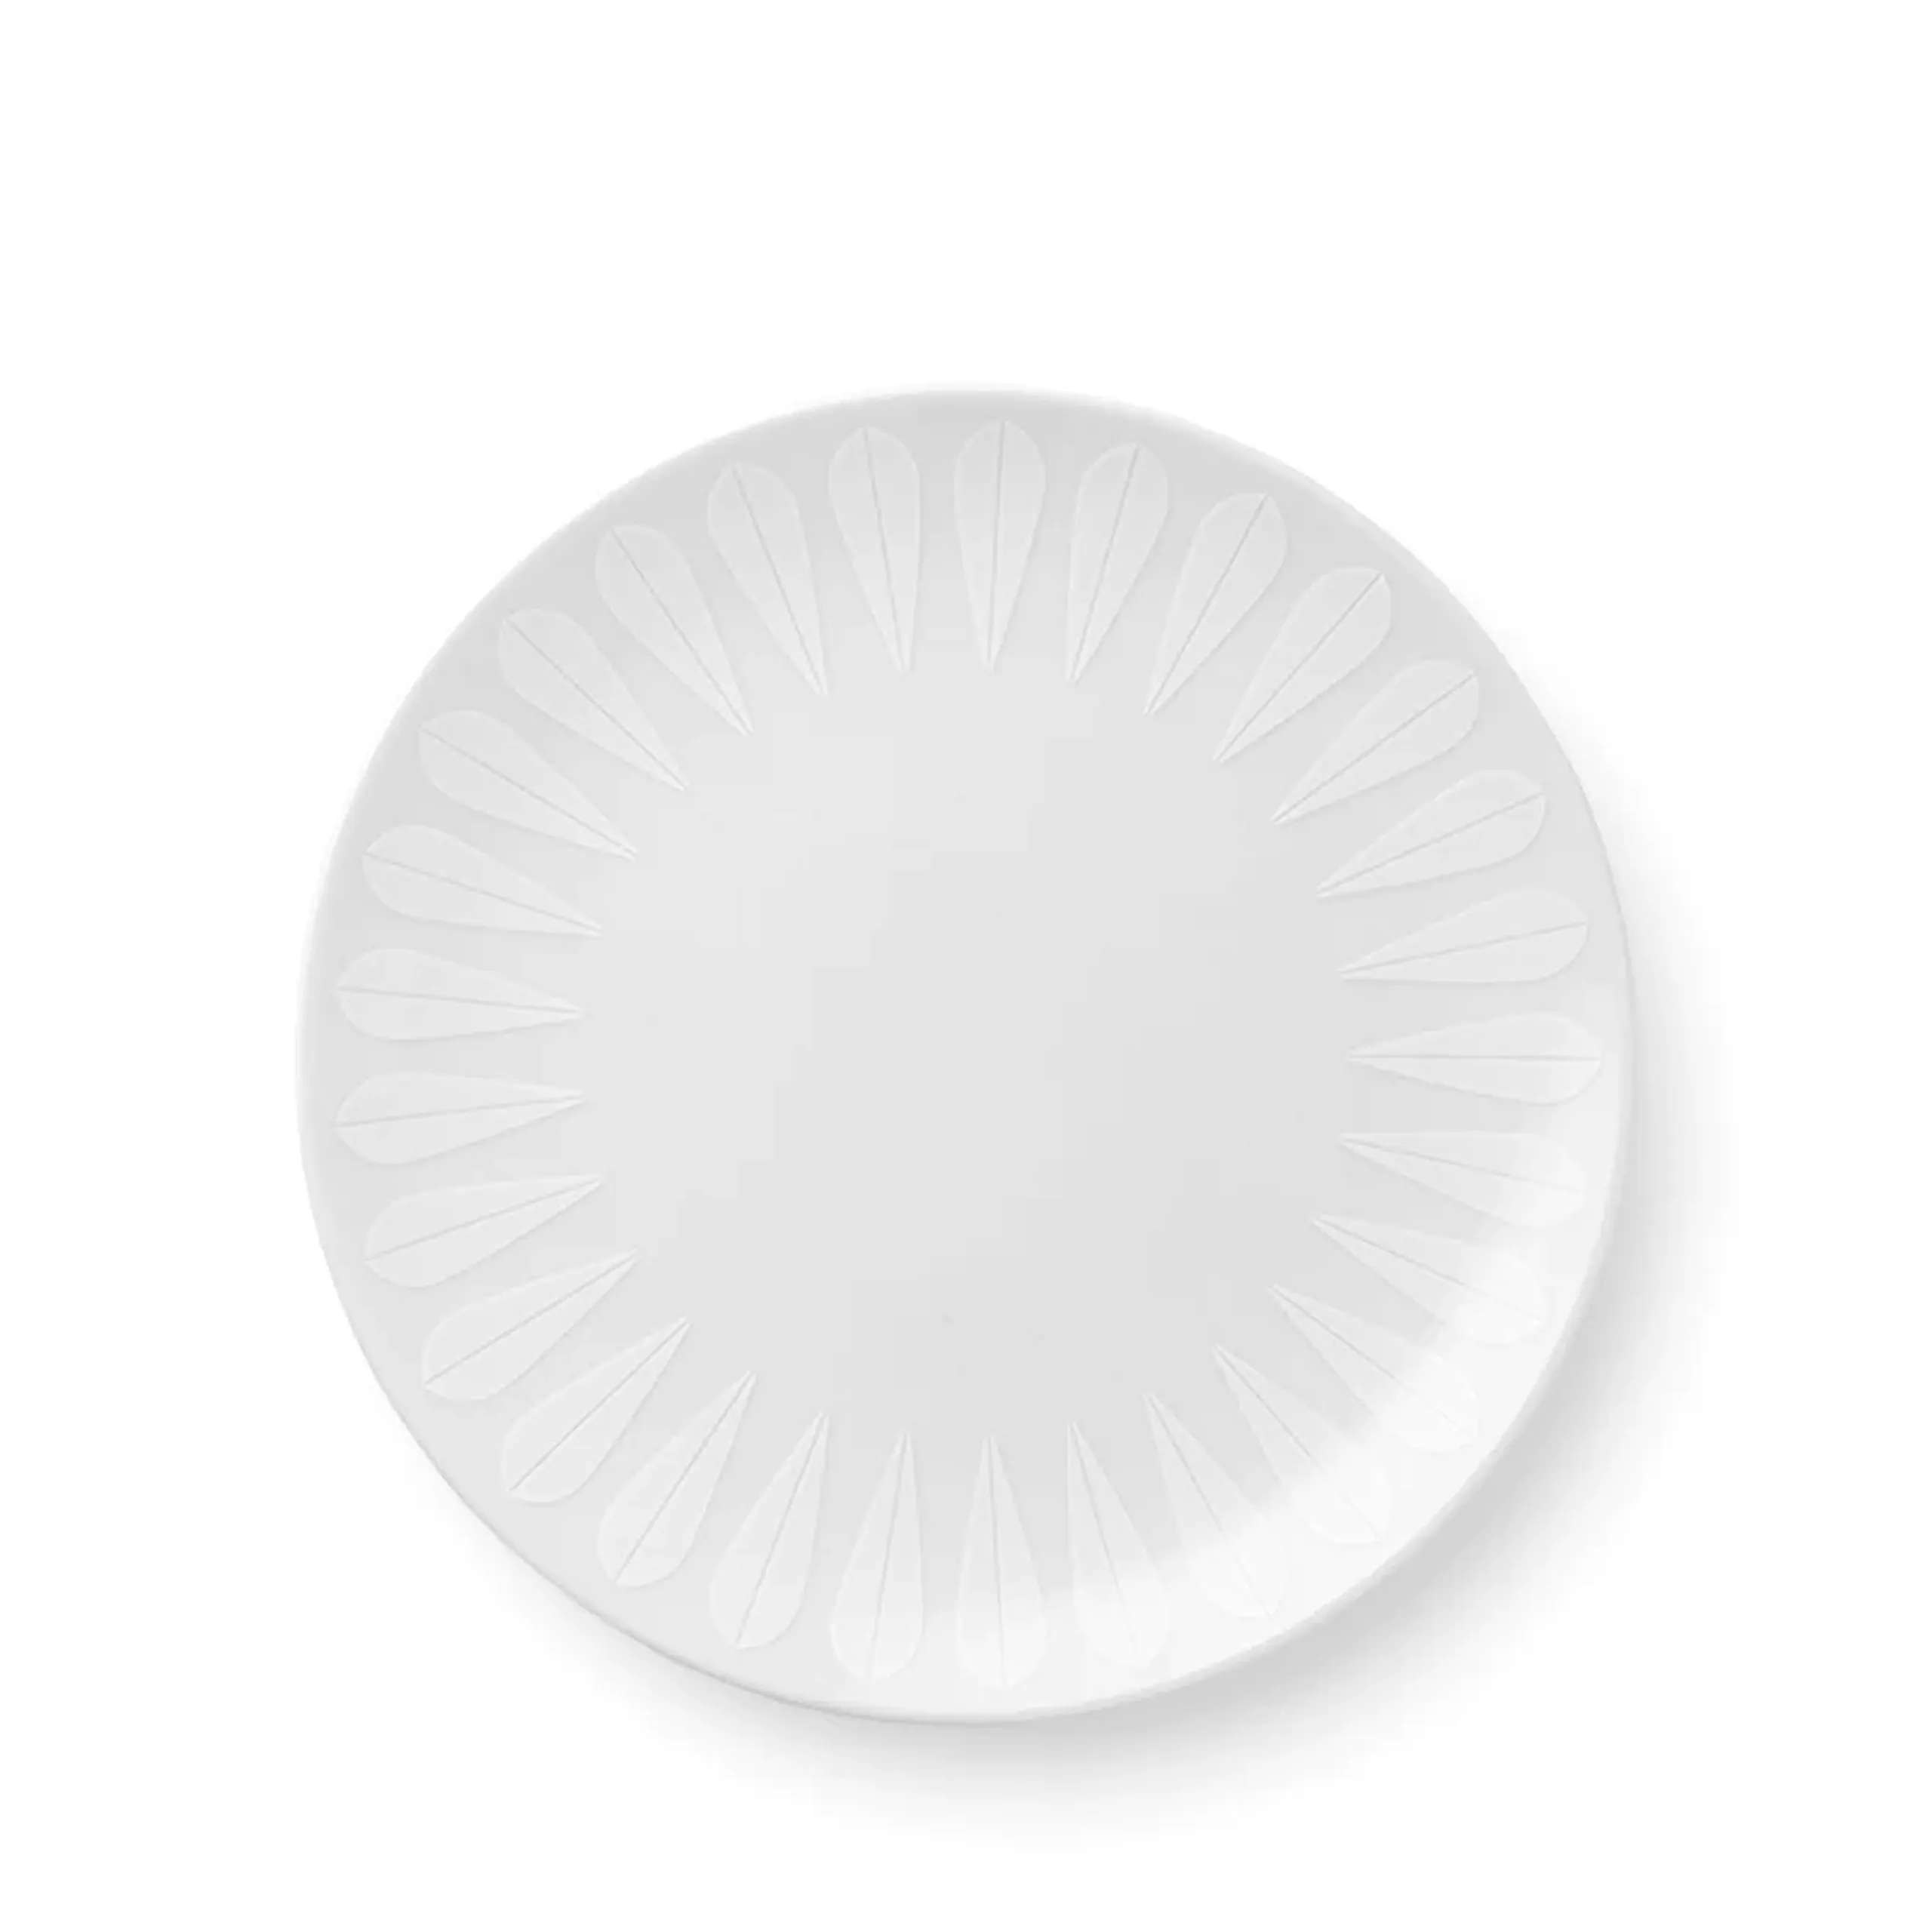 Lucie Kaas - Plate - Lotus Plate | White or Black - White